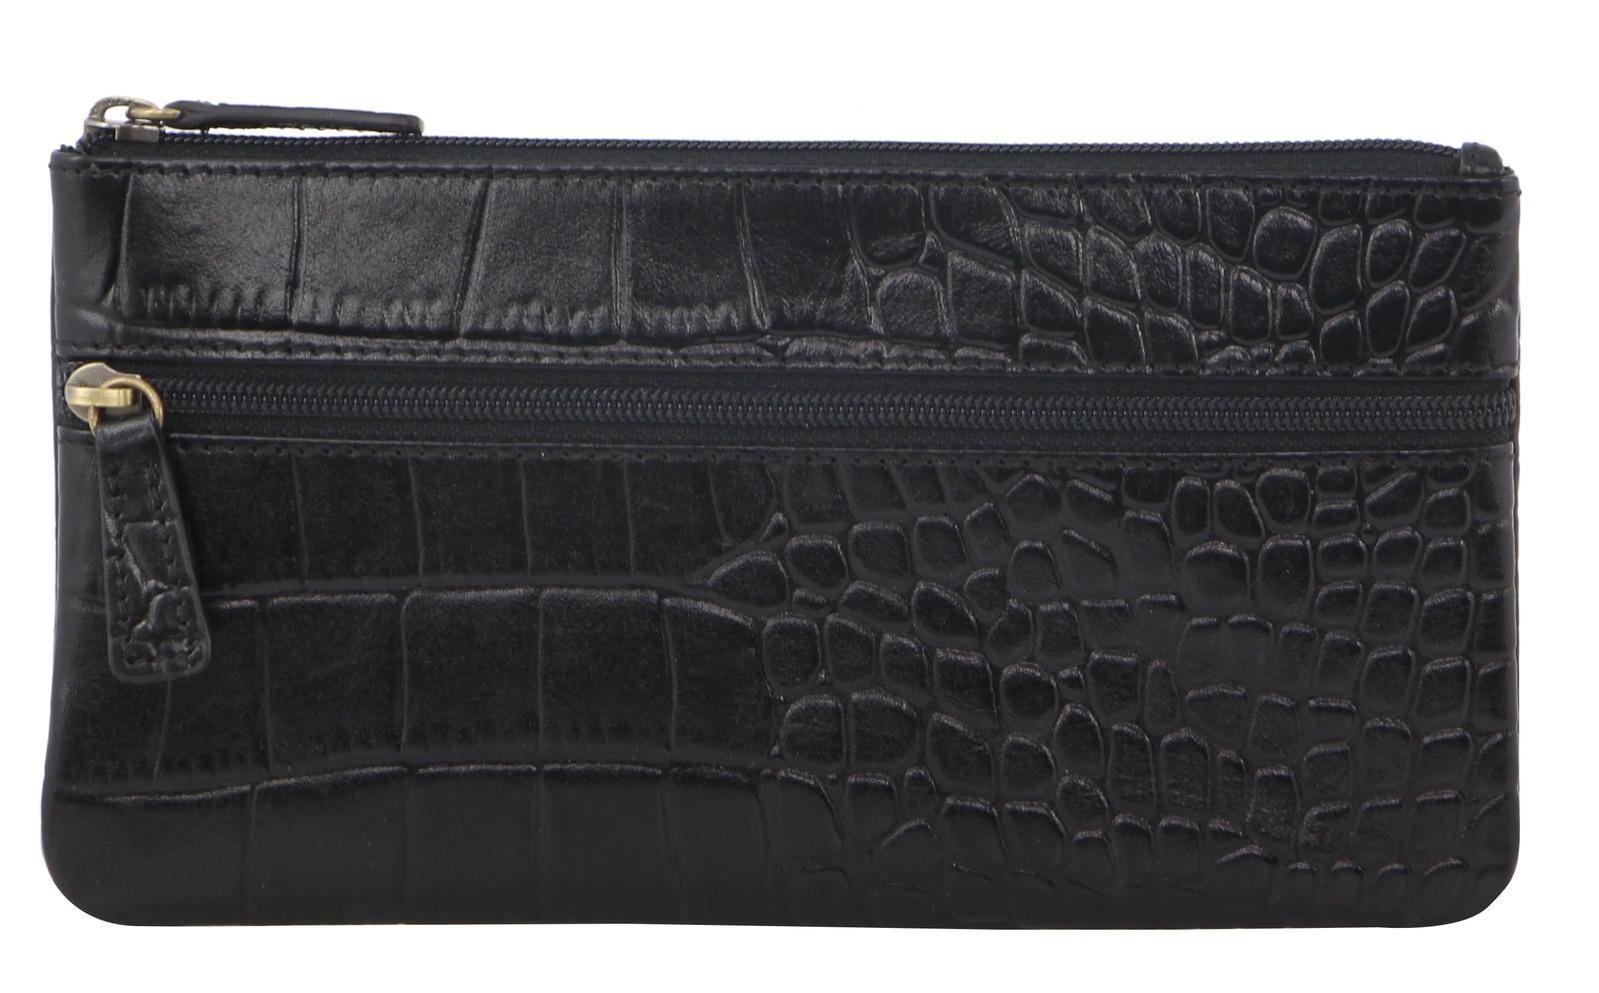 Pierre Cardin Ladies Womens Genuine Soft Leather Italian Wallet - Black/Croc